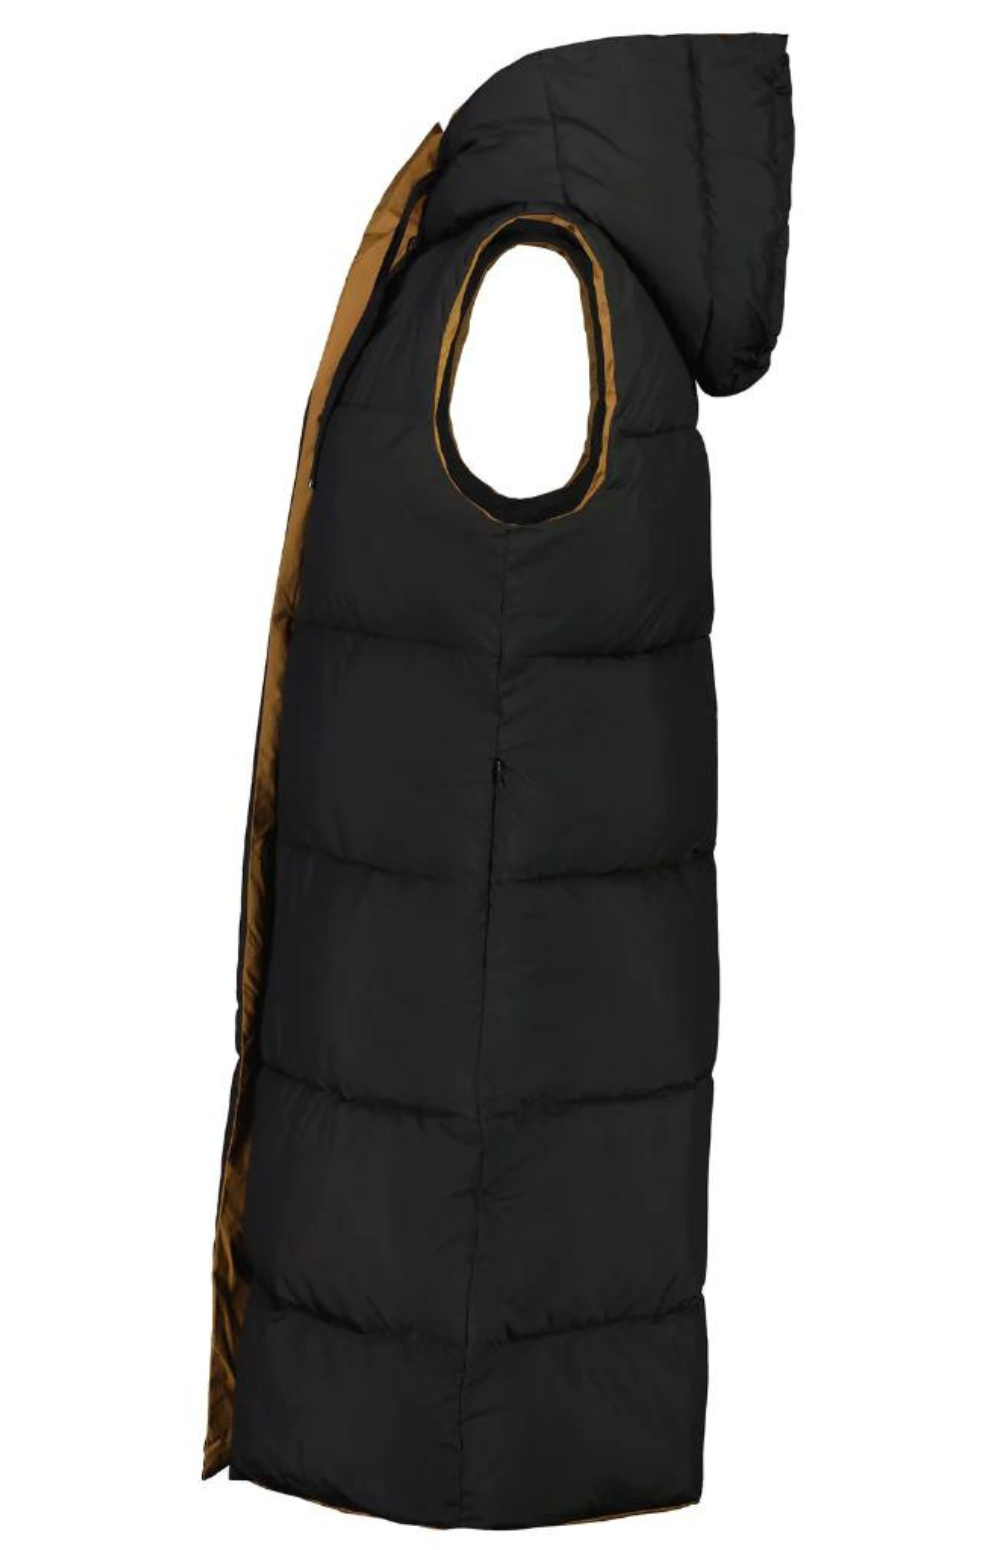 Moké - Kyri Women's Long Reversible Vest in Black/Camel